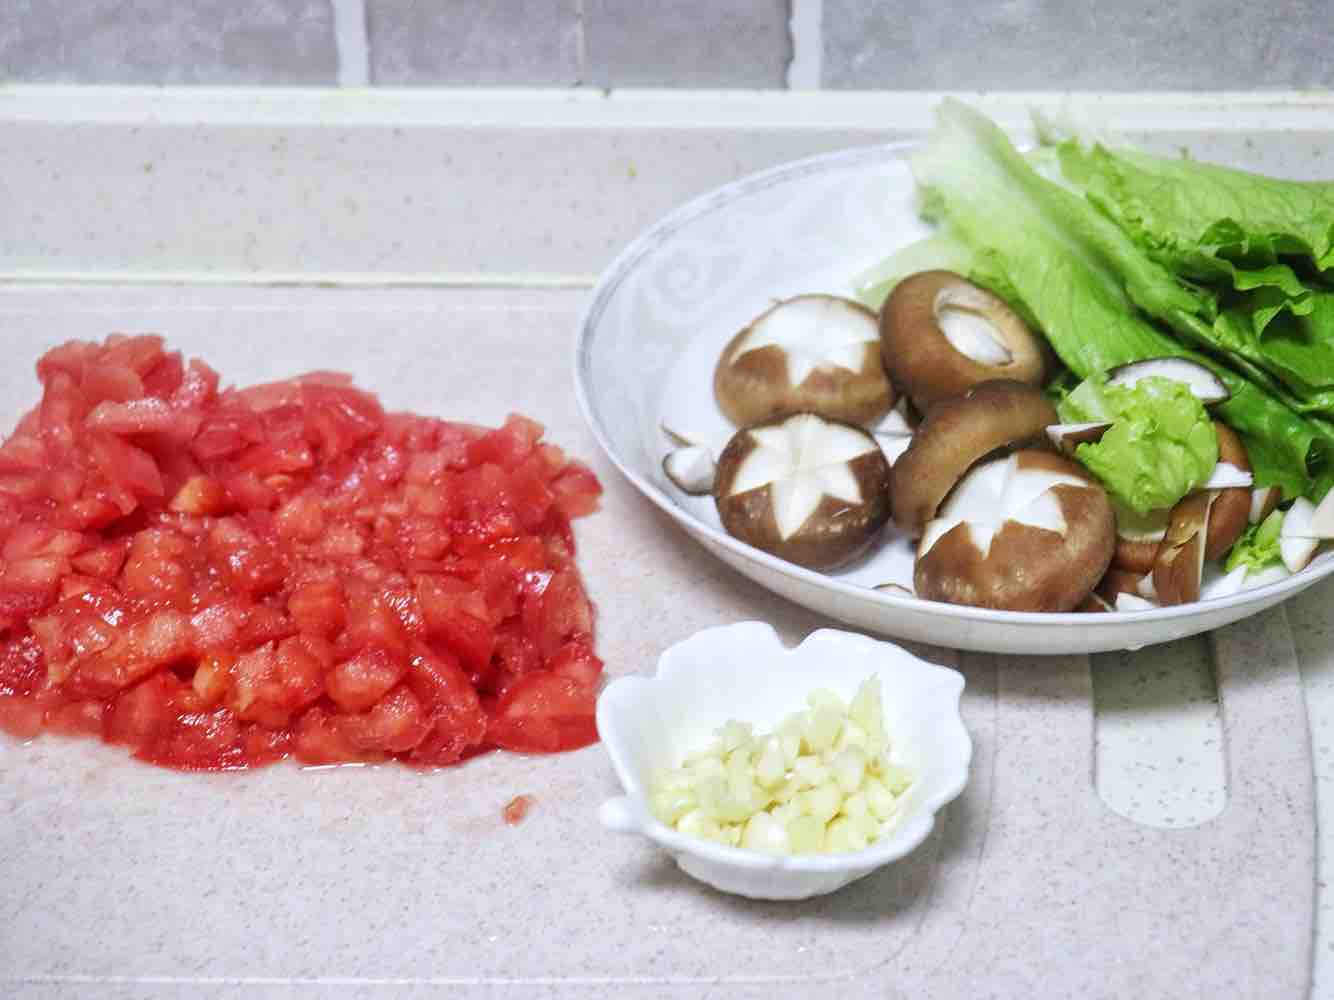 Home-made Tomato Pot recipe